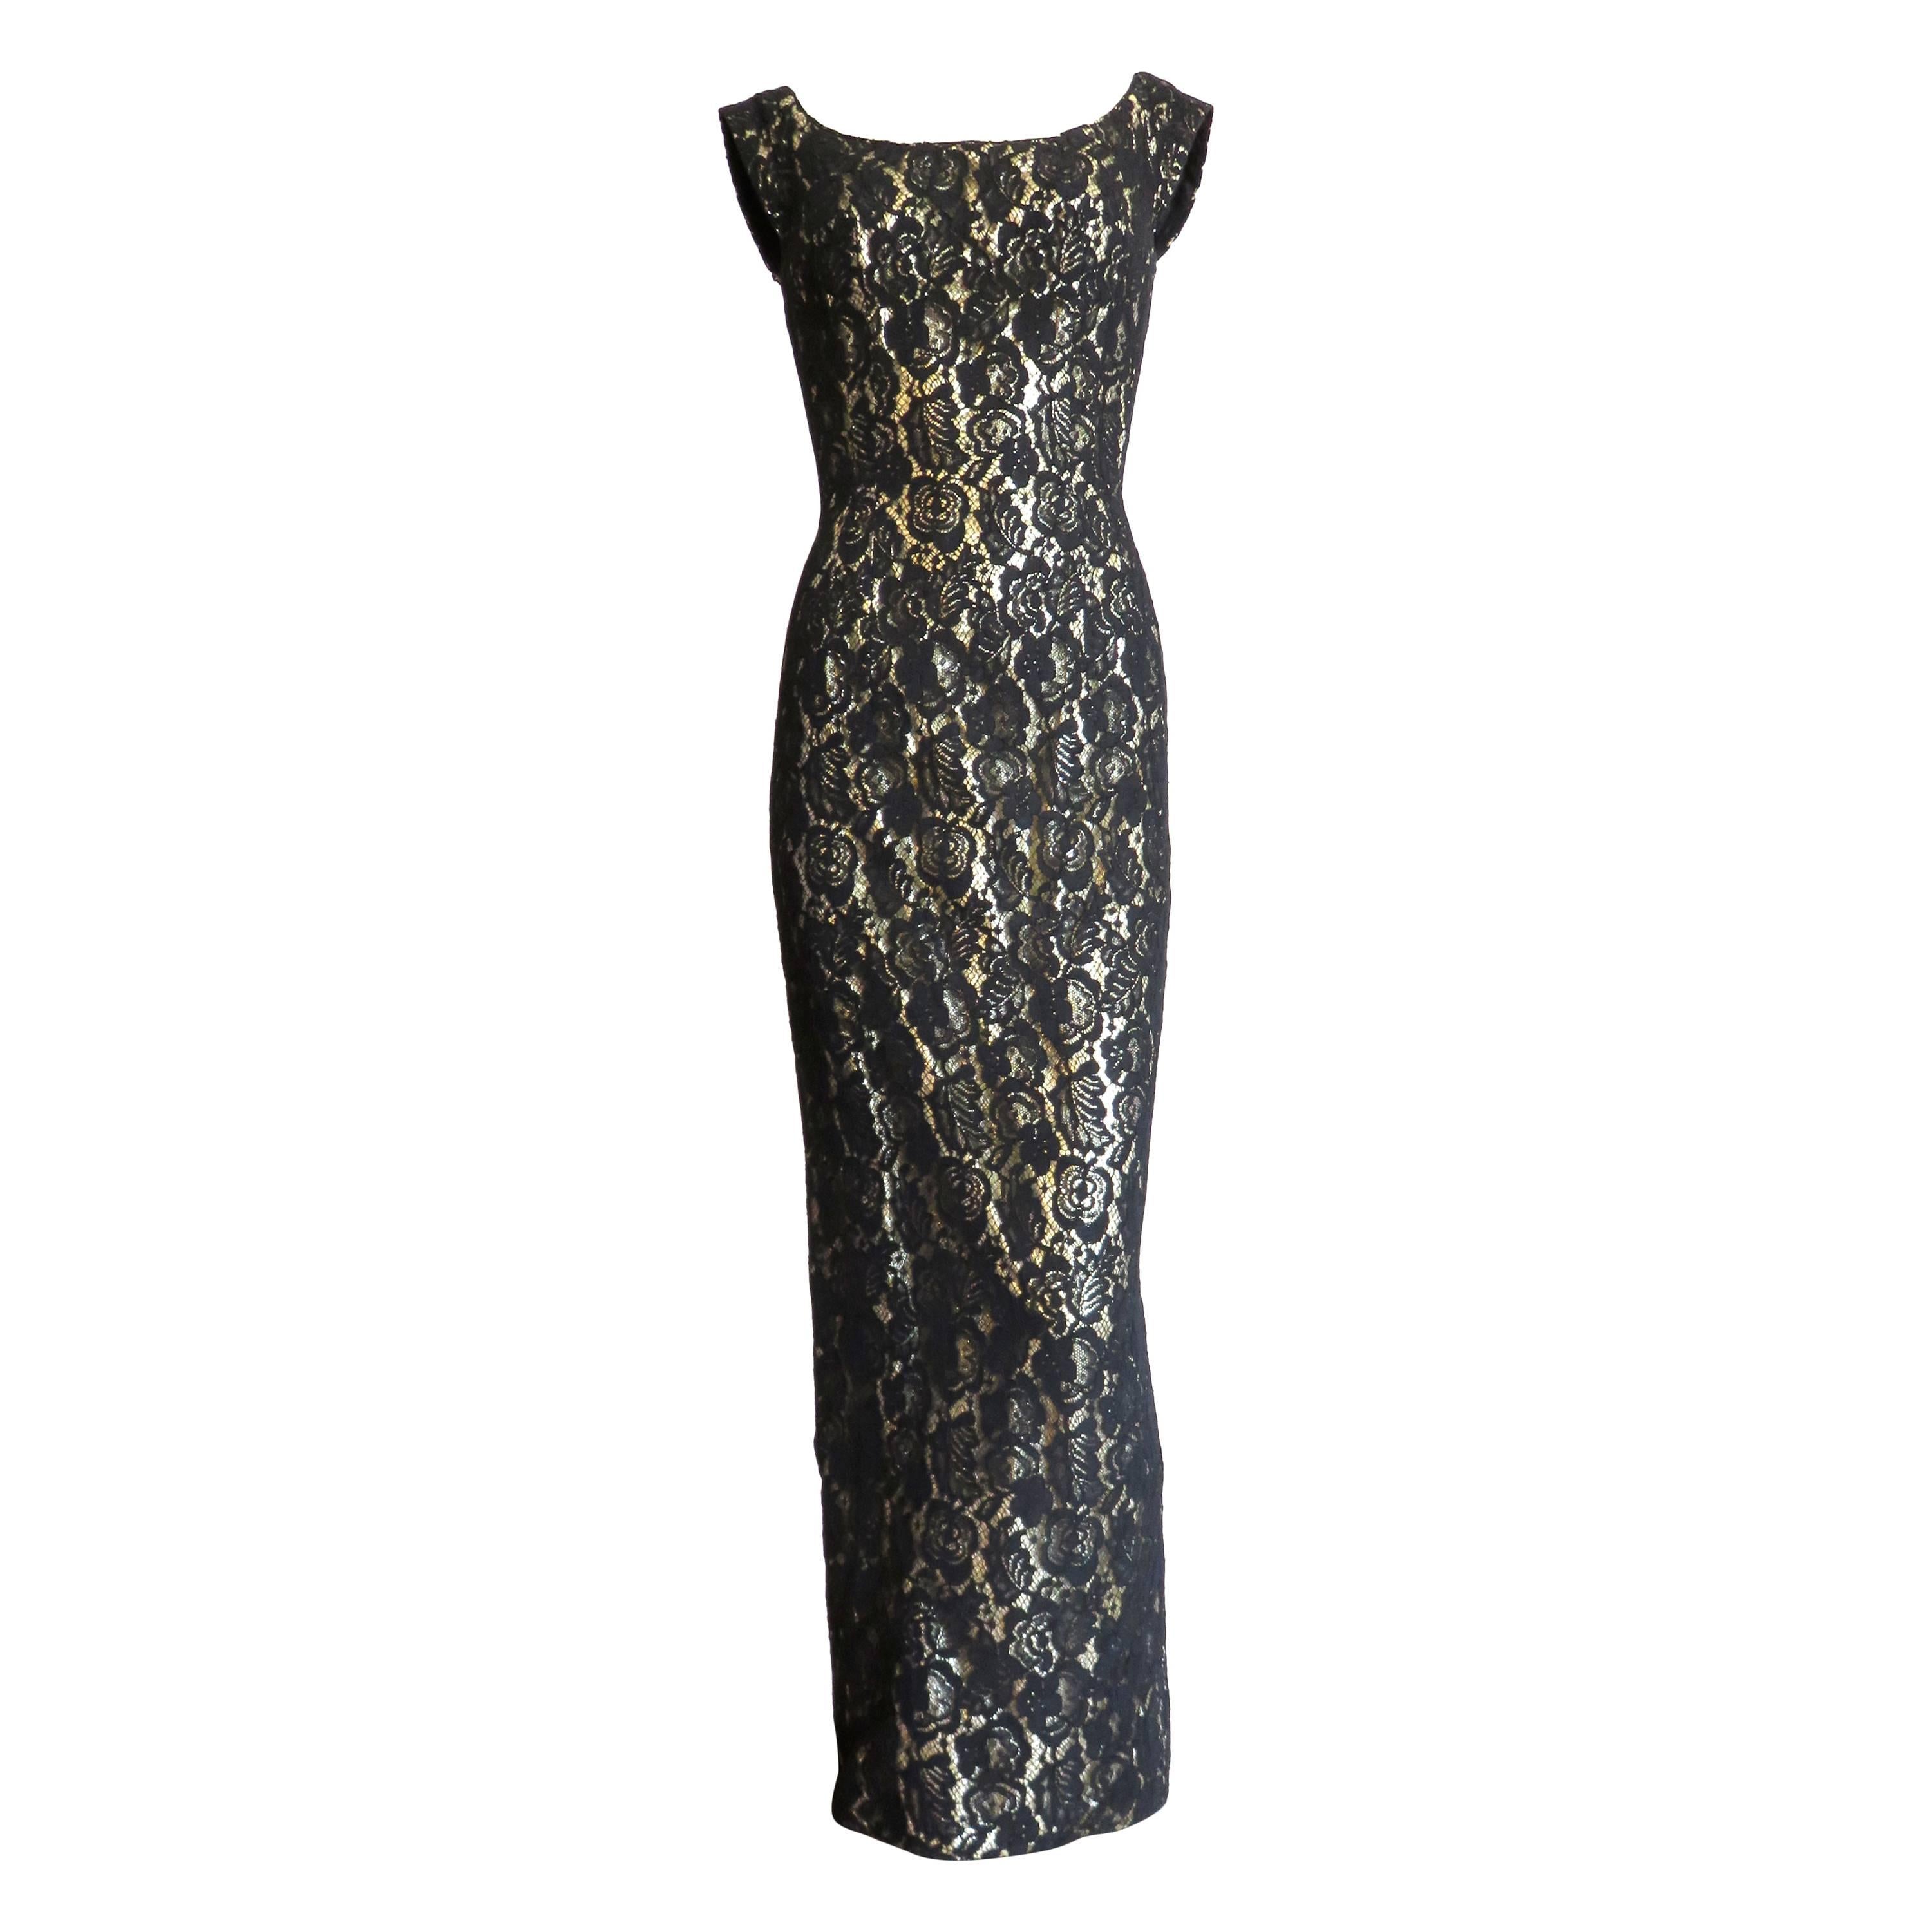 1960's MR. BLACKWELL CUSTOM Gold lame black lace overlay evening dress